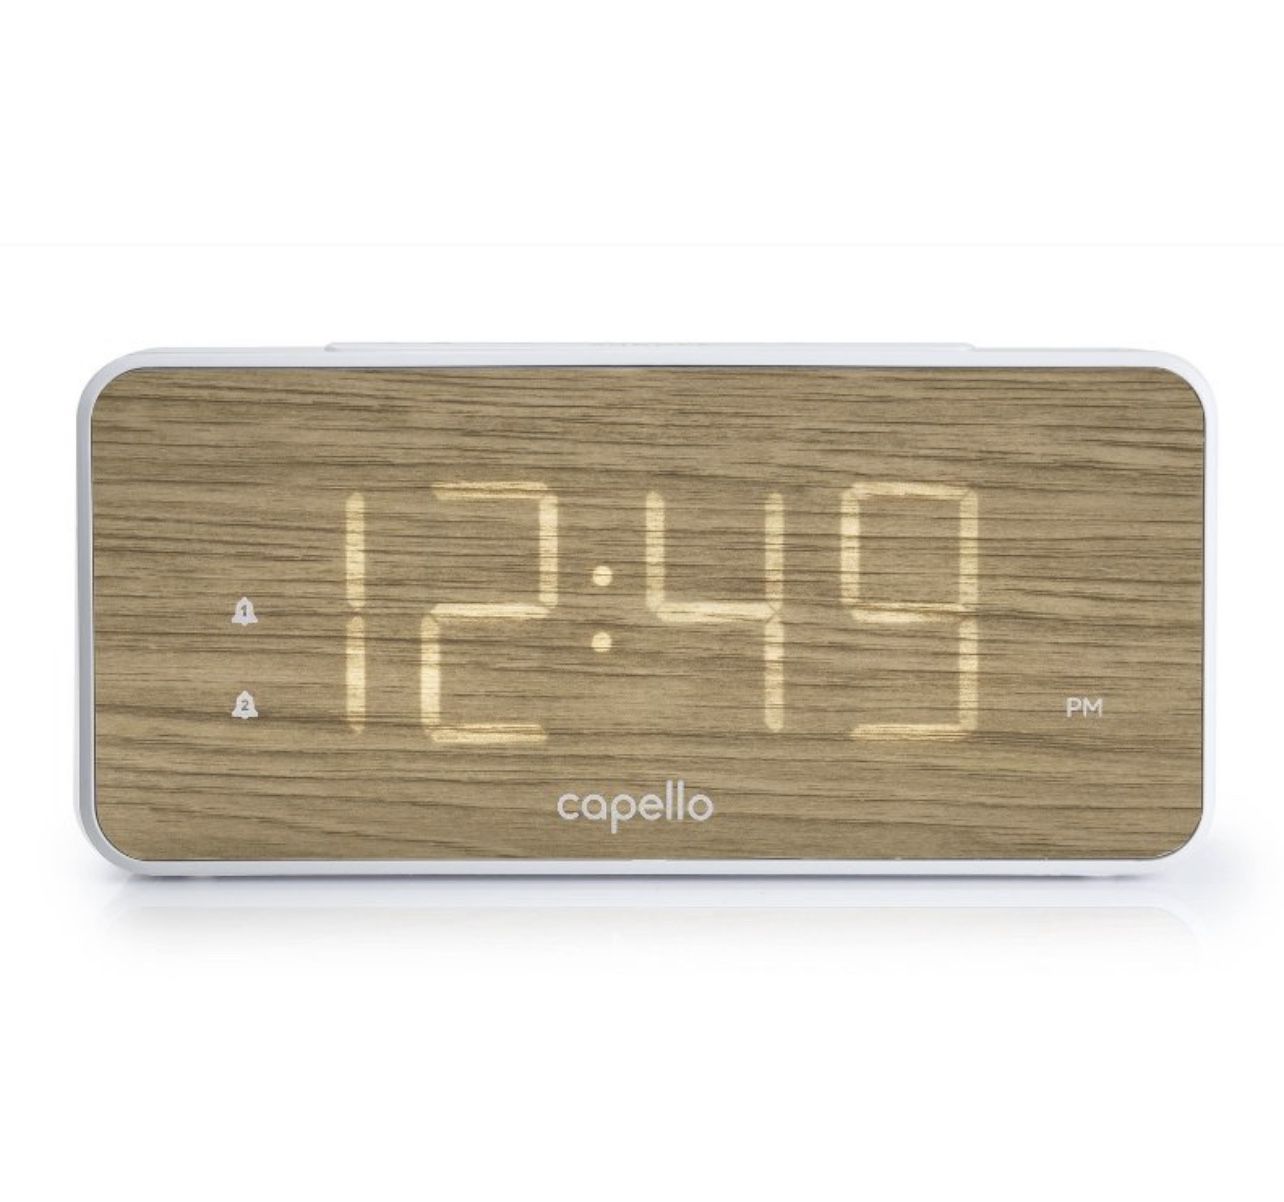 Extra Large Display Digital Alarm Clock White/Pine - Capello